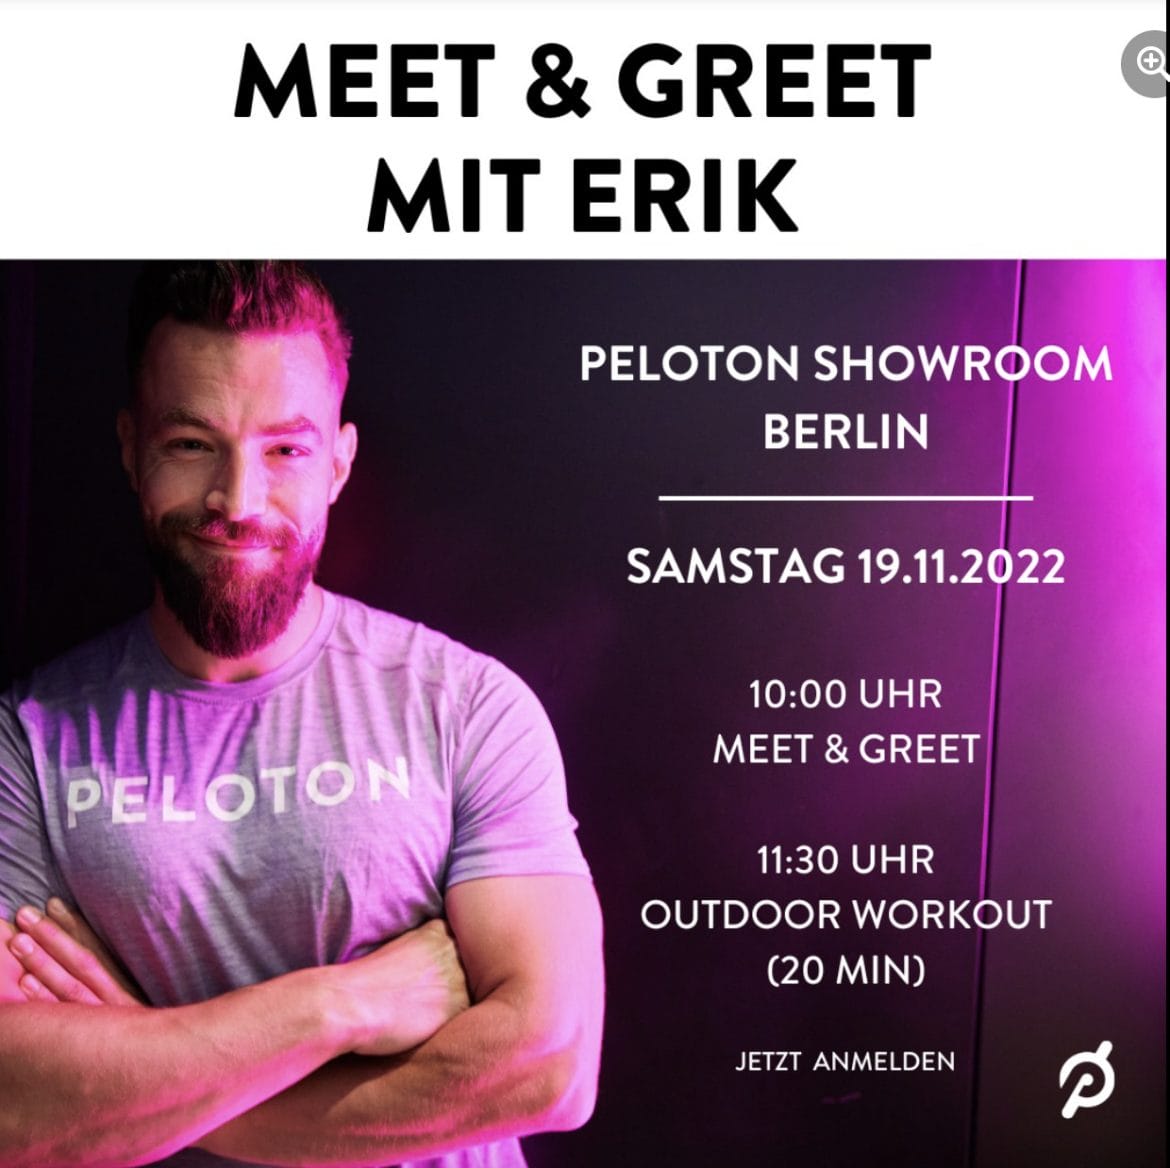 Peloton Meet & Greet announcement on Facebook. Image credit Peloton.